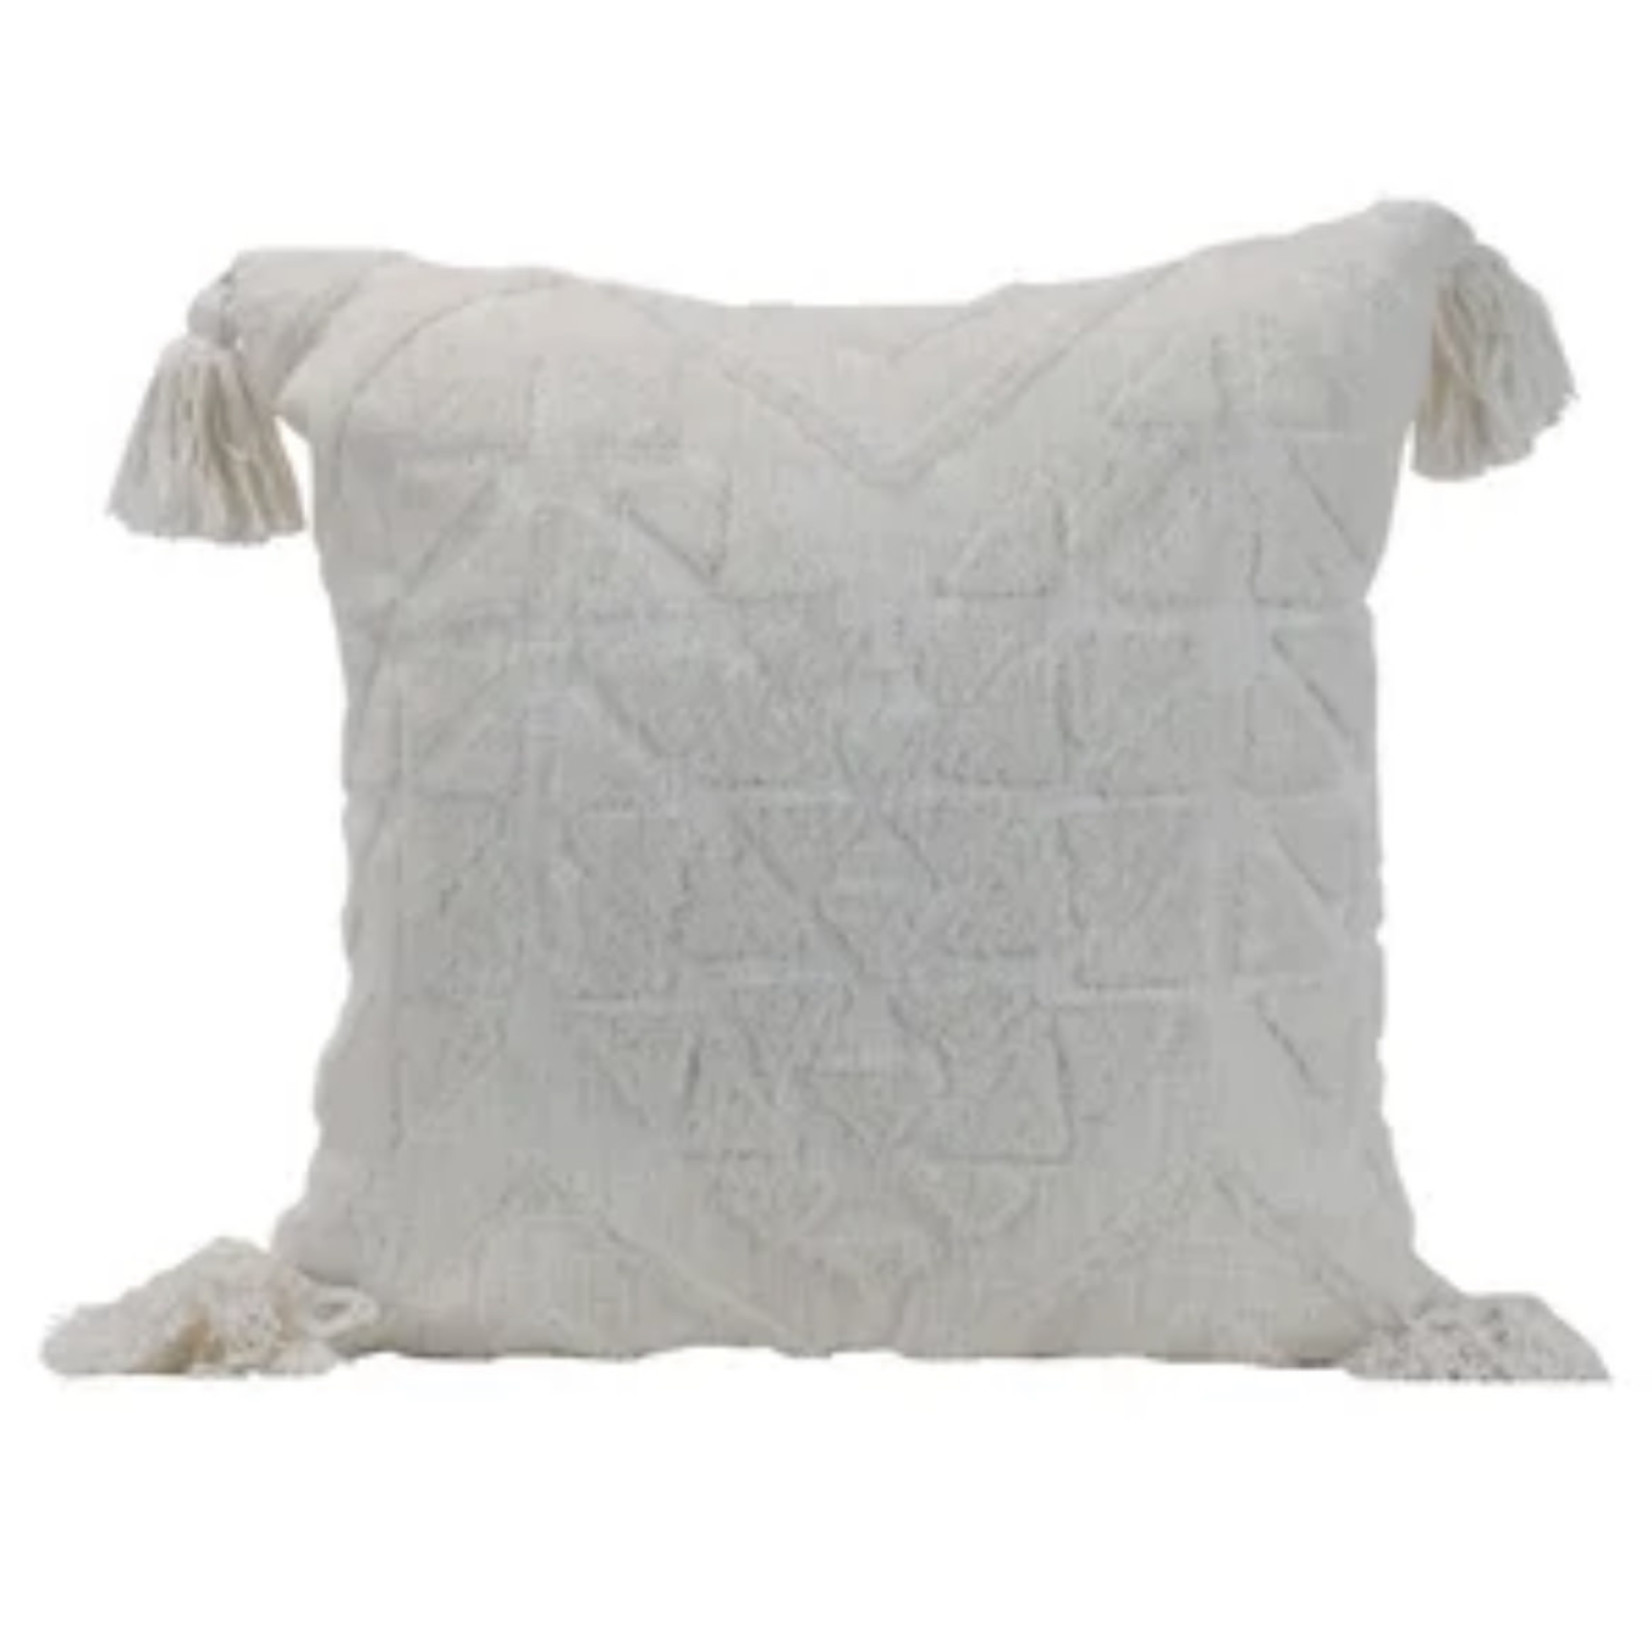 18"x18" Hand Woven Ingles Pillow